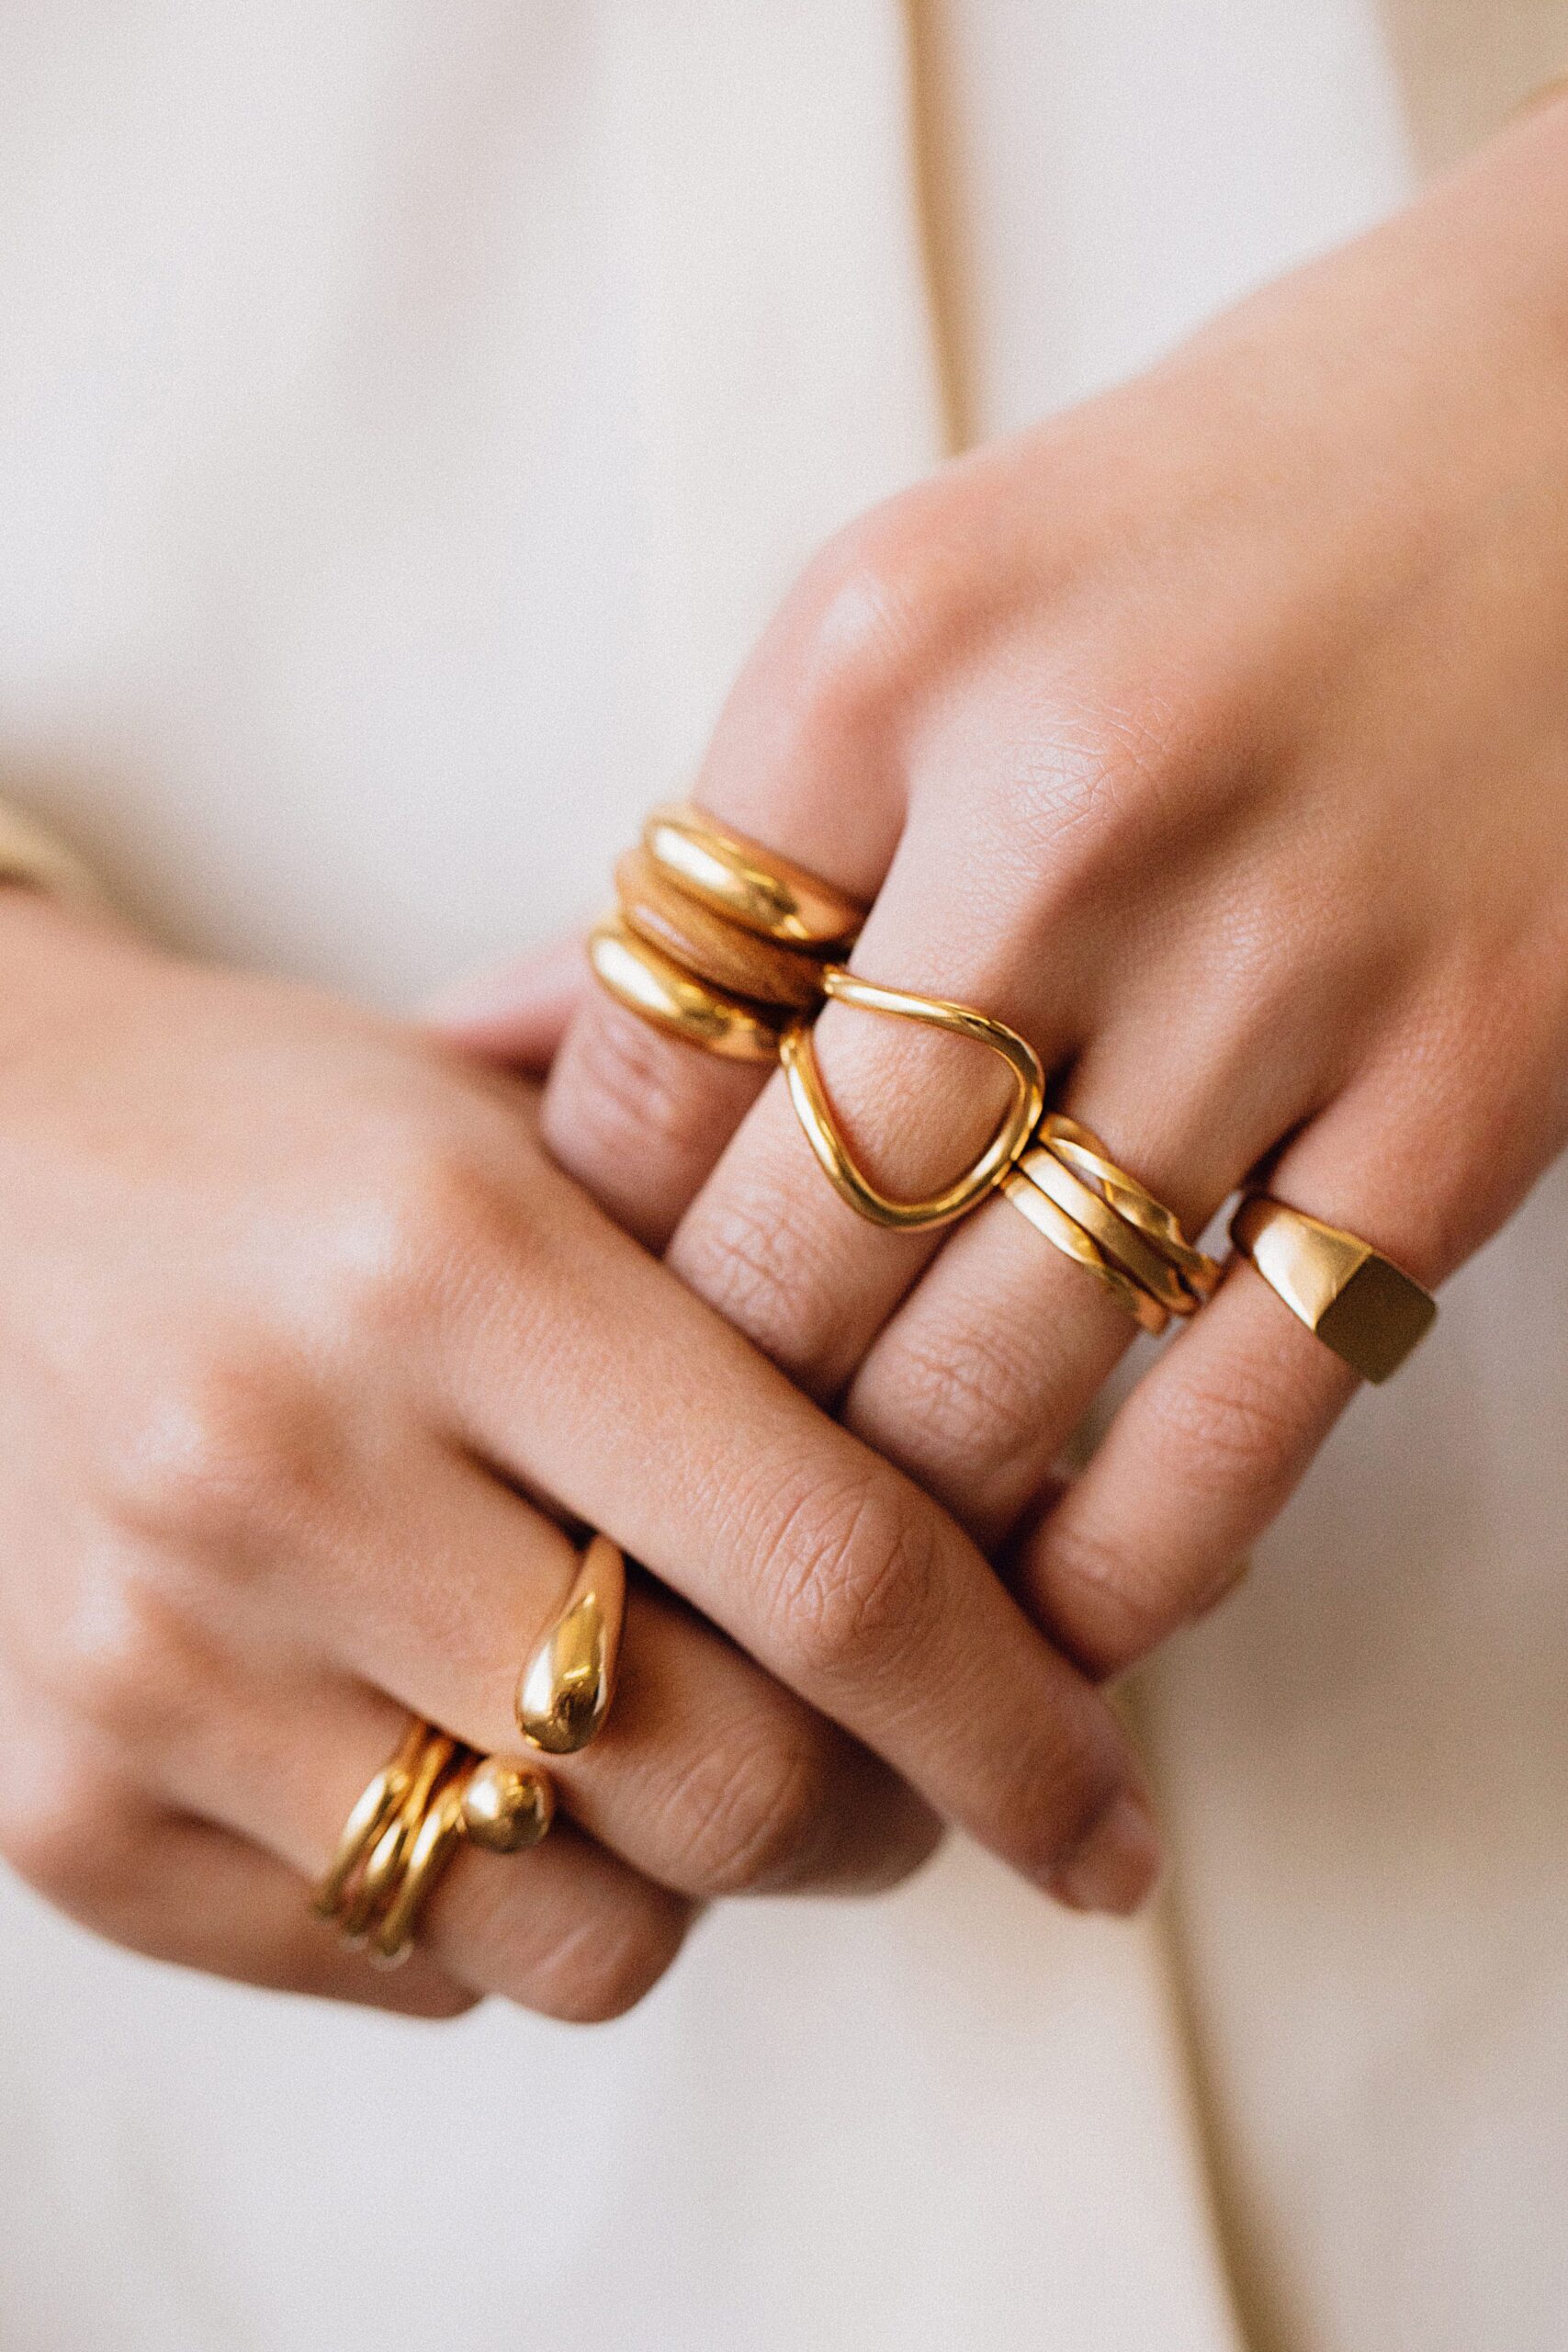 Stylish jewellery rings: enhances your beauty